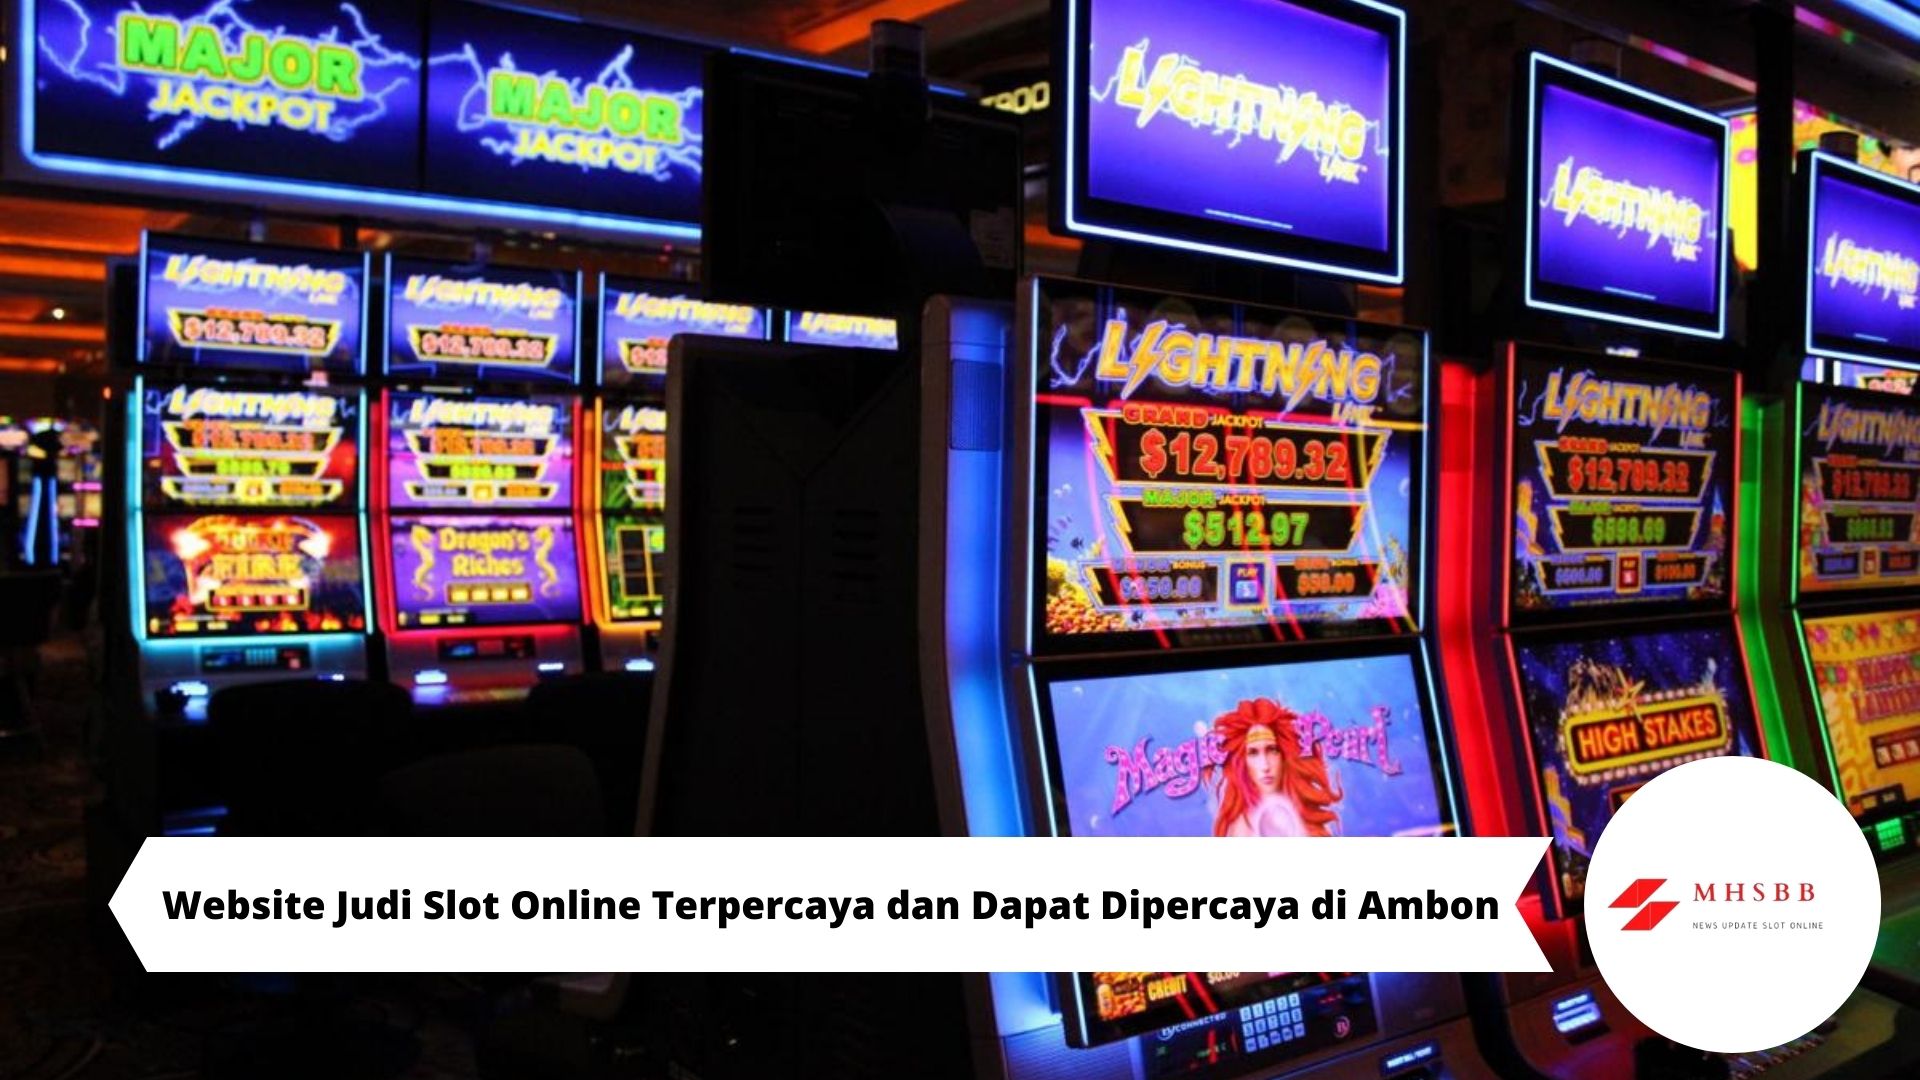 Website Judi Slot Online Terpercaya dan Dapat Dipercaya di Ambon